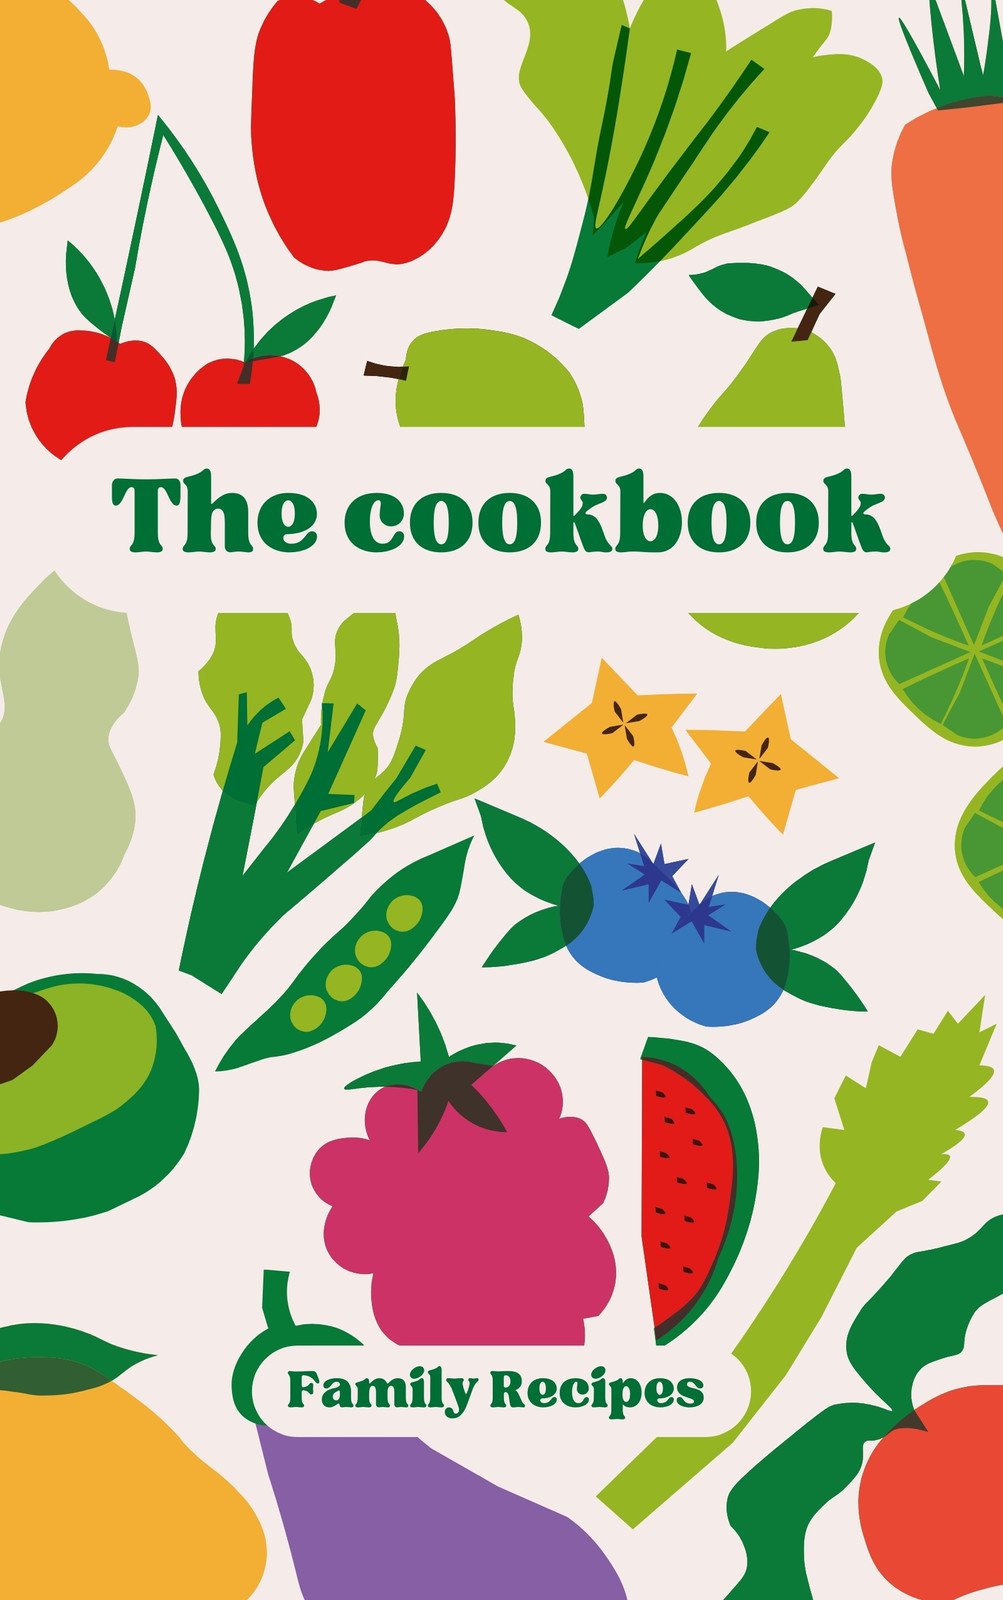 recipe book cover template